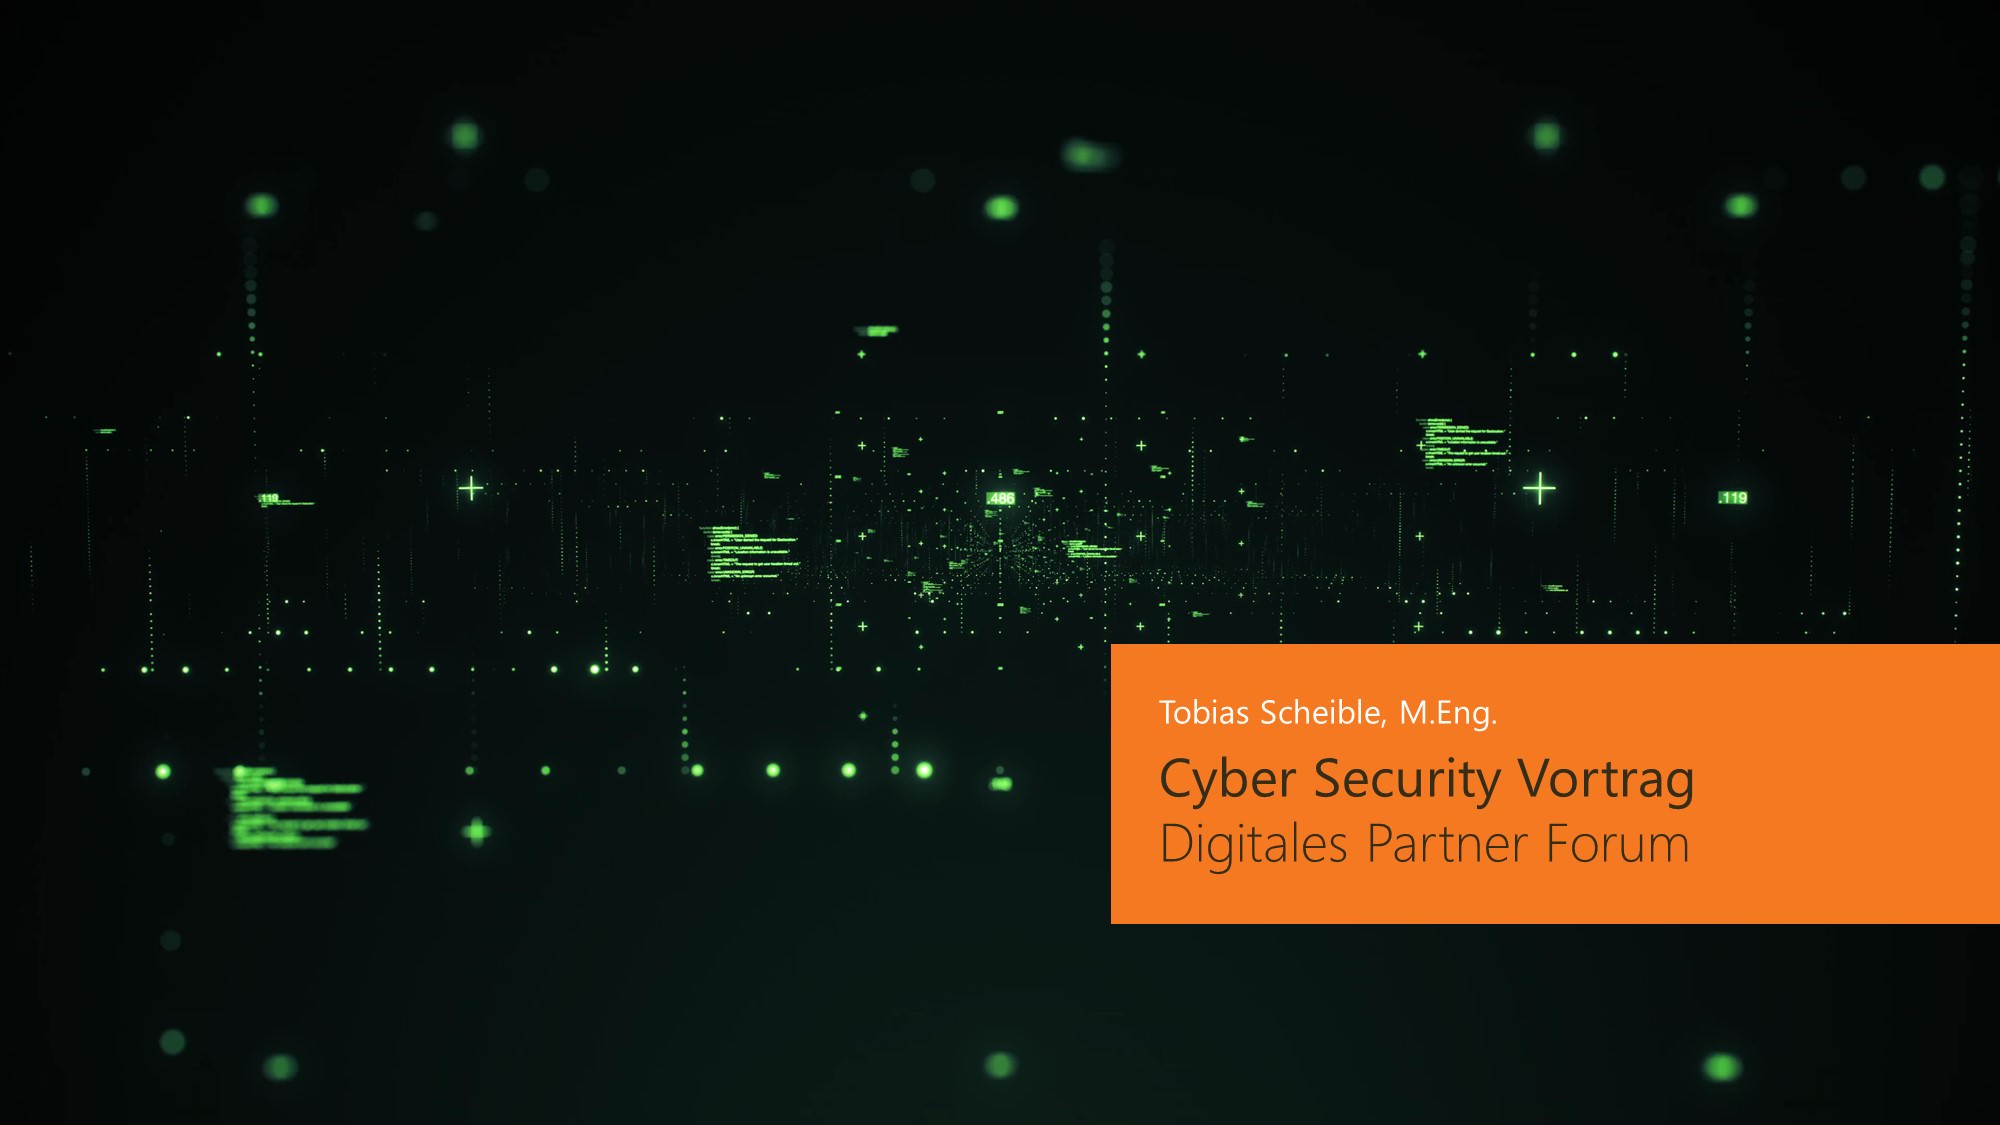 Cyber Security Vortrag